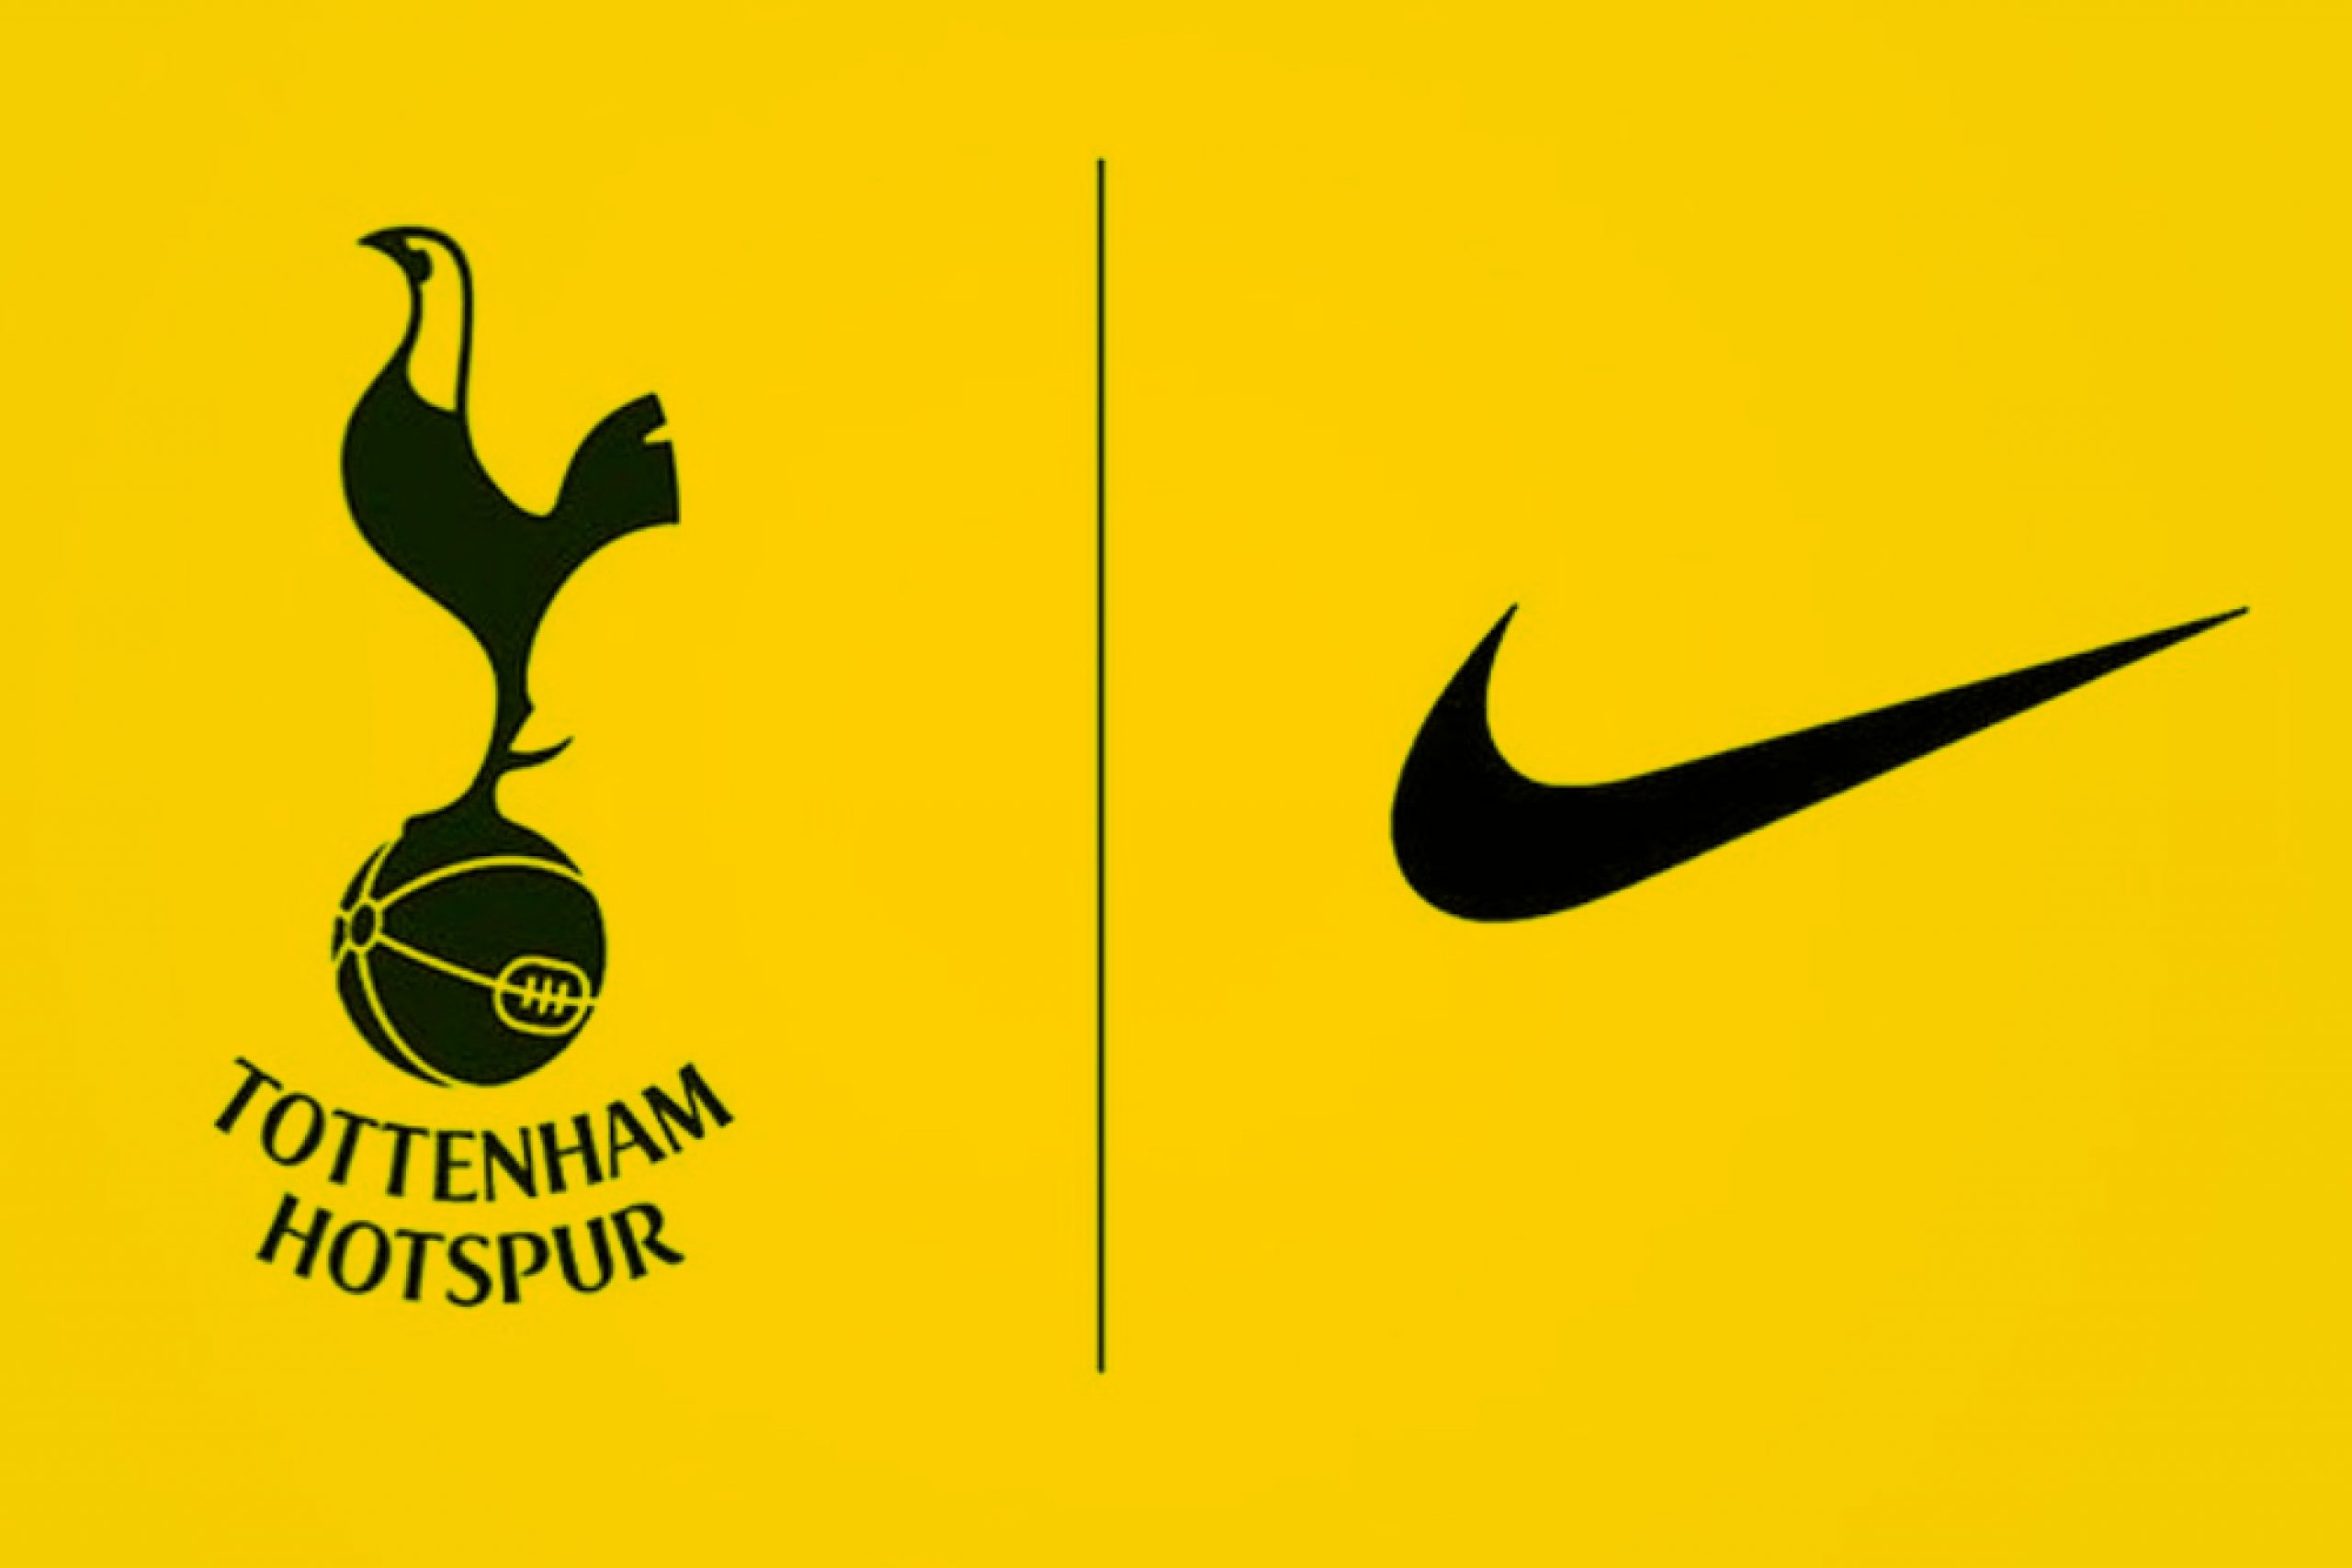 Photo – The yellow monstrosity doing the rounds as Tottenham’s third kit for 20/21 season